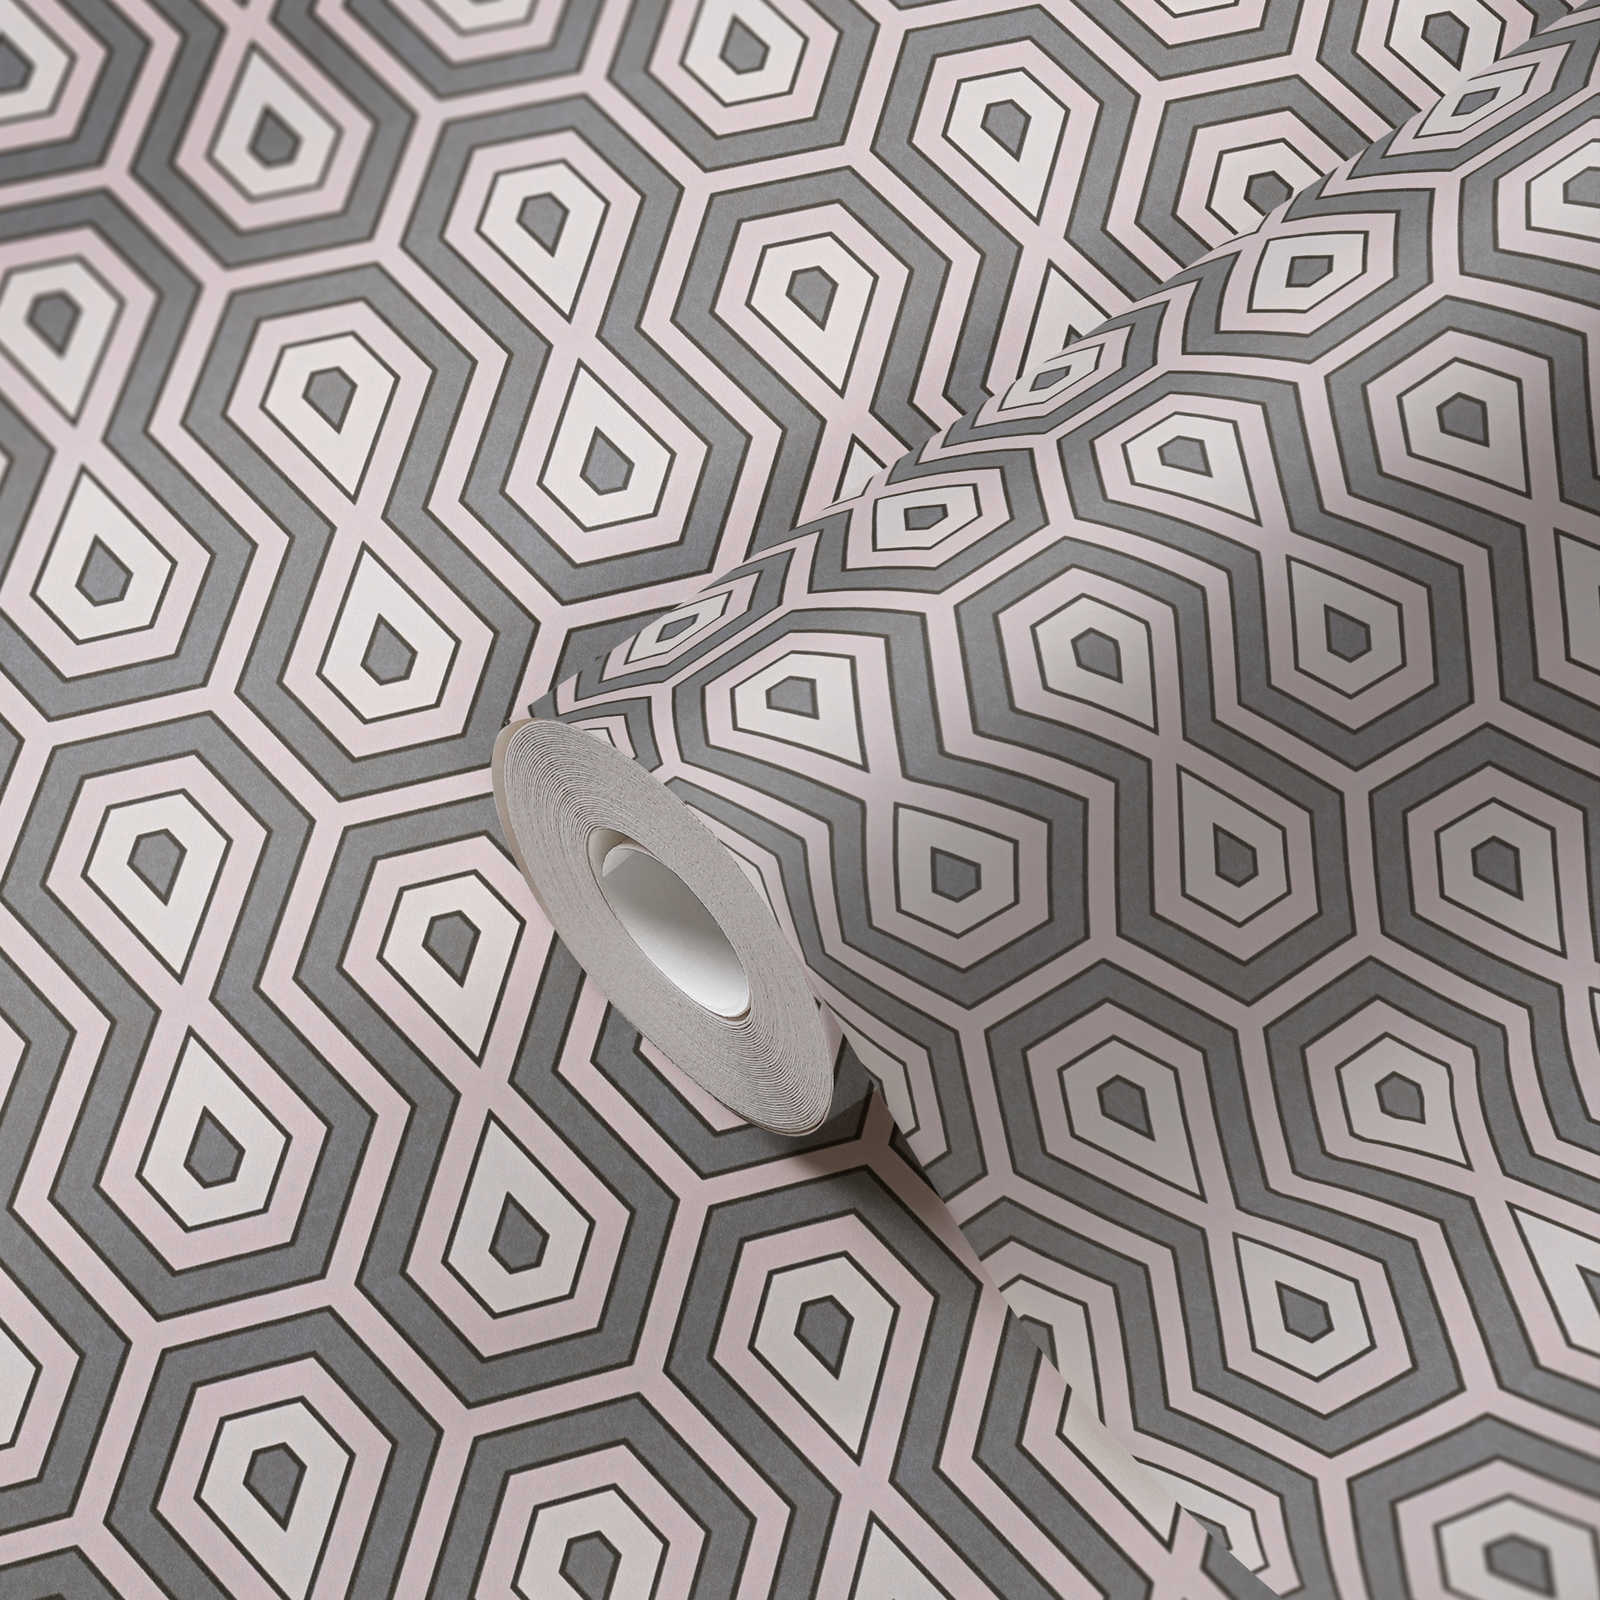             Wallpaper metallic retro pattern with 70s graphic design - pink, grey, white
        